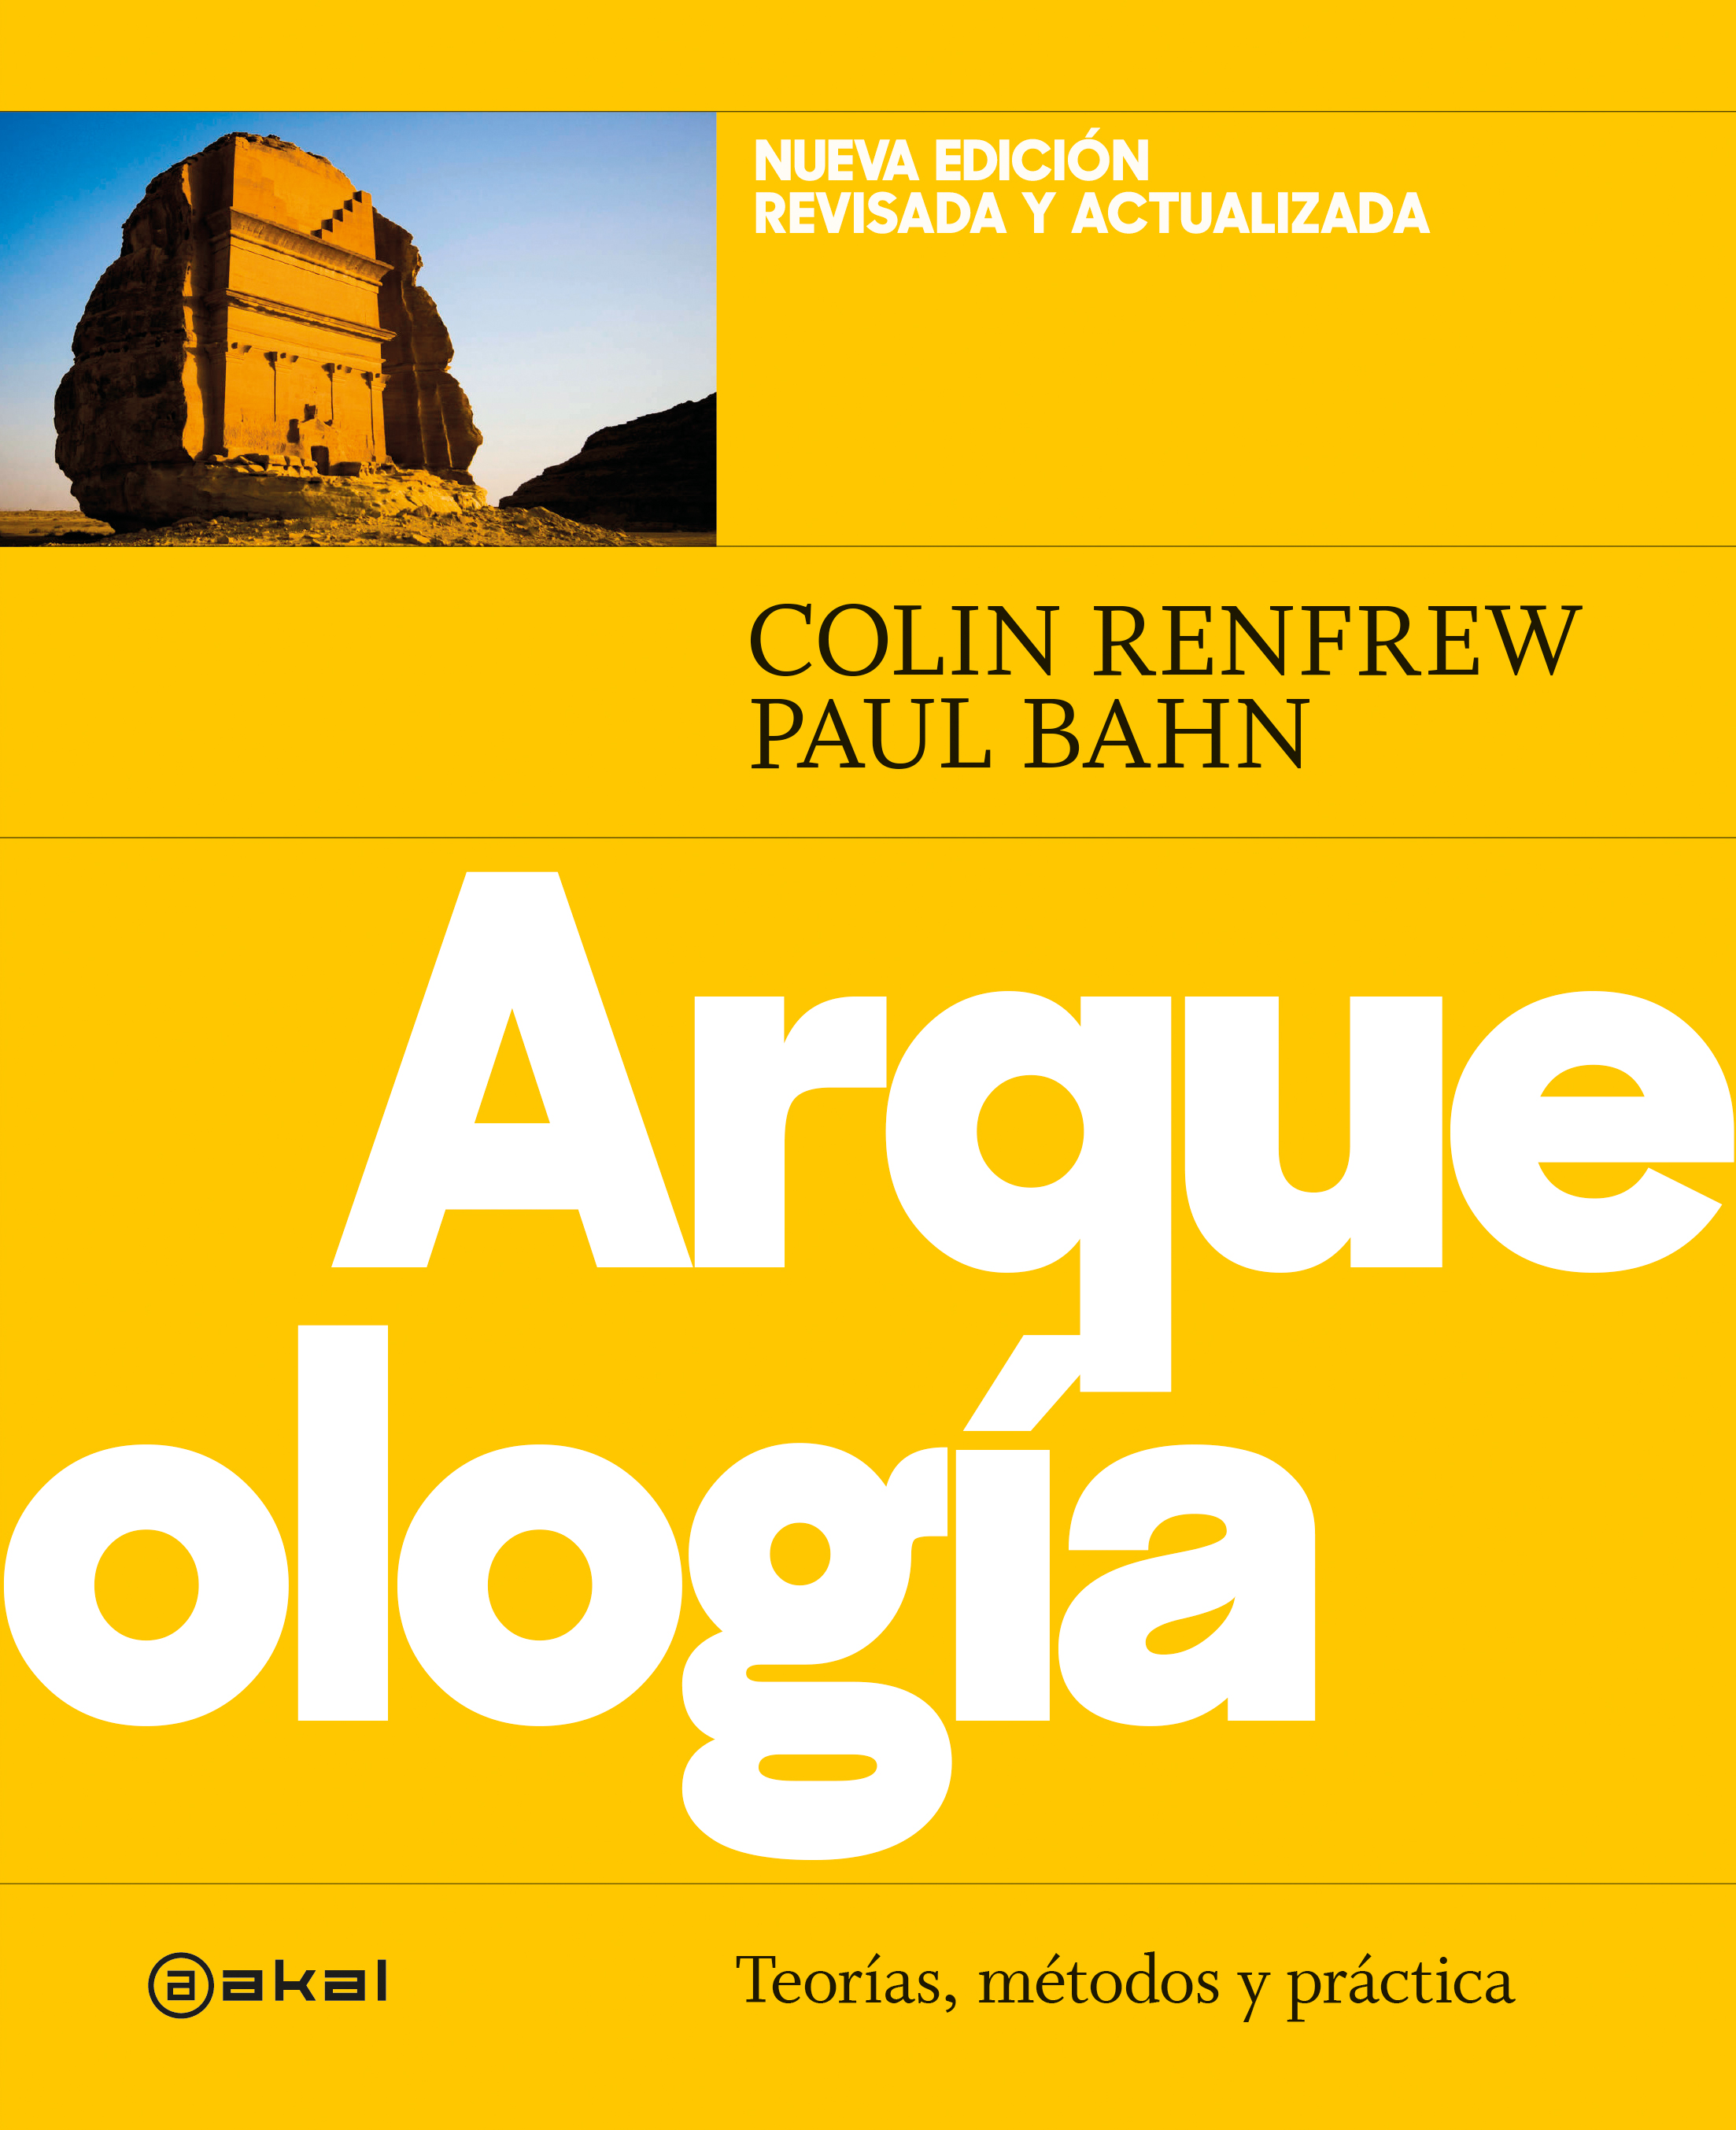 ARQUEOLOGÍA - Colin Renfrew | Paul Bahn